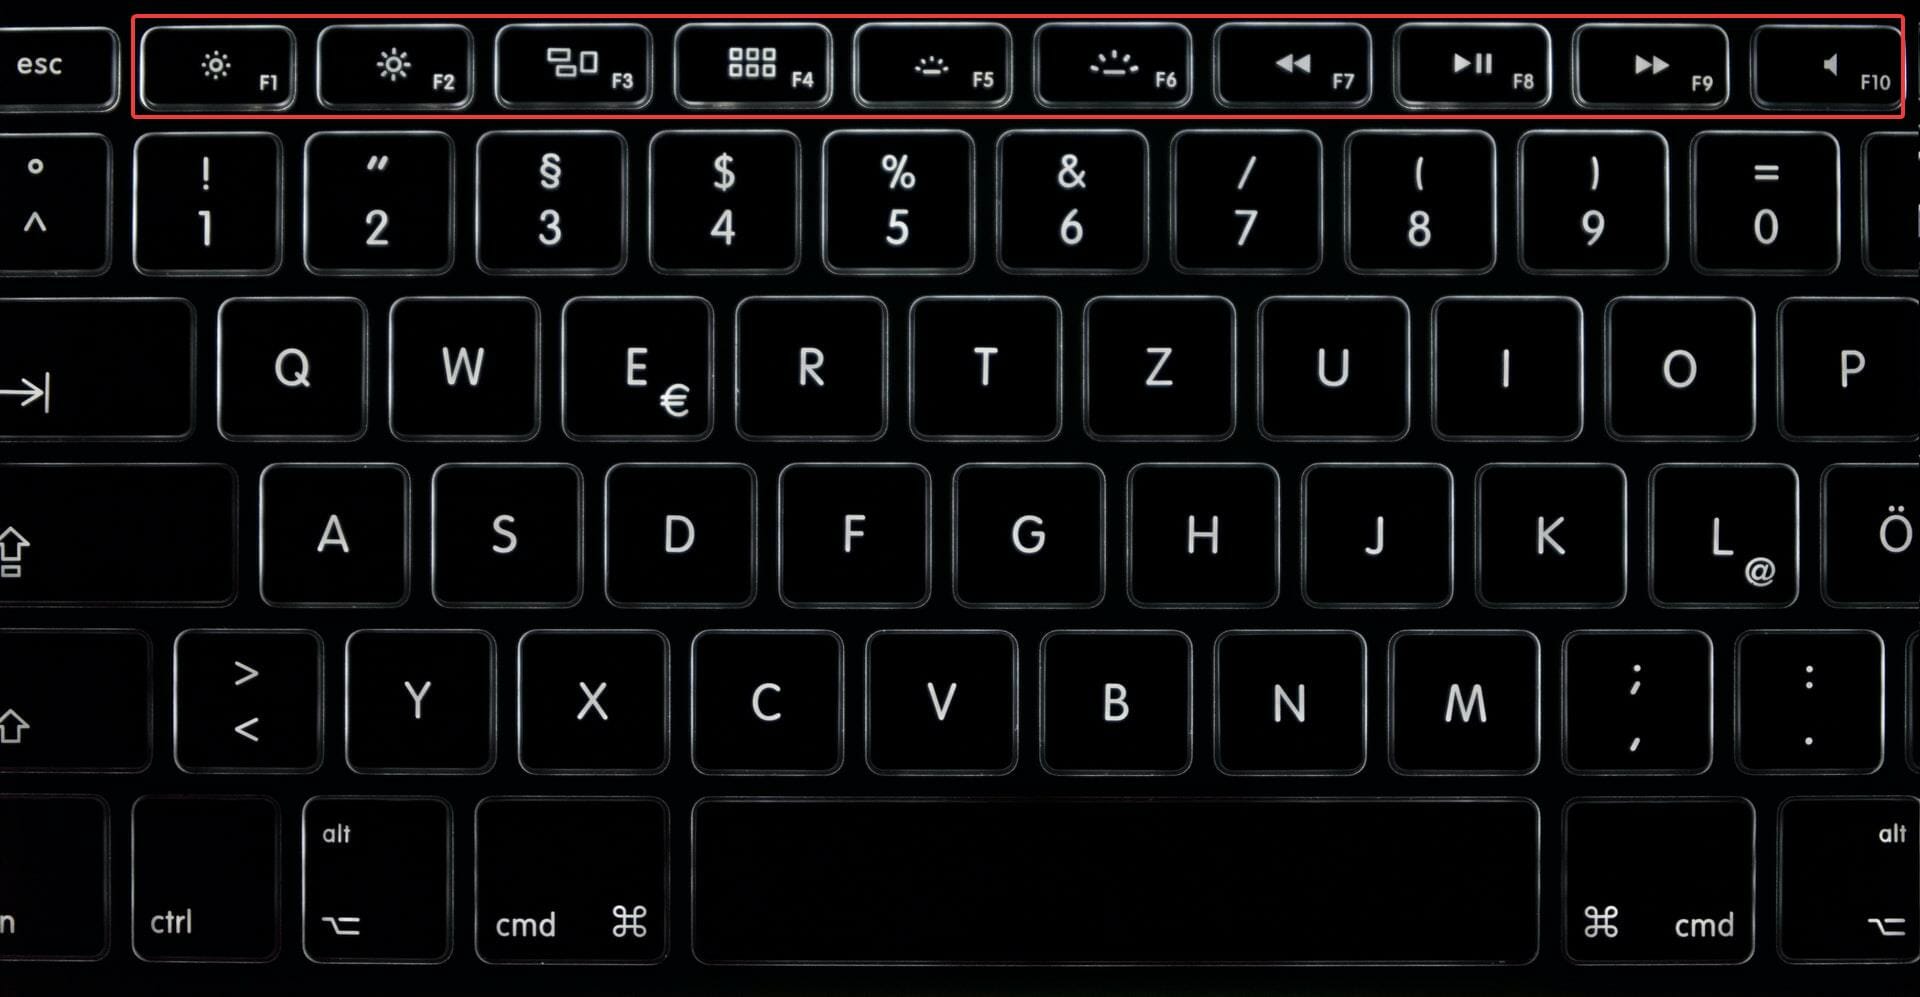 function keys on keyboard example